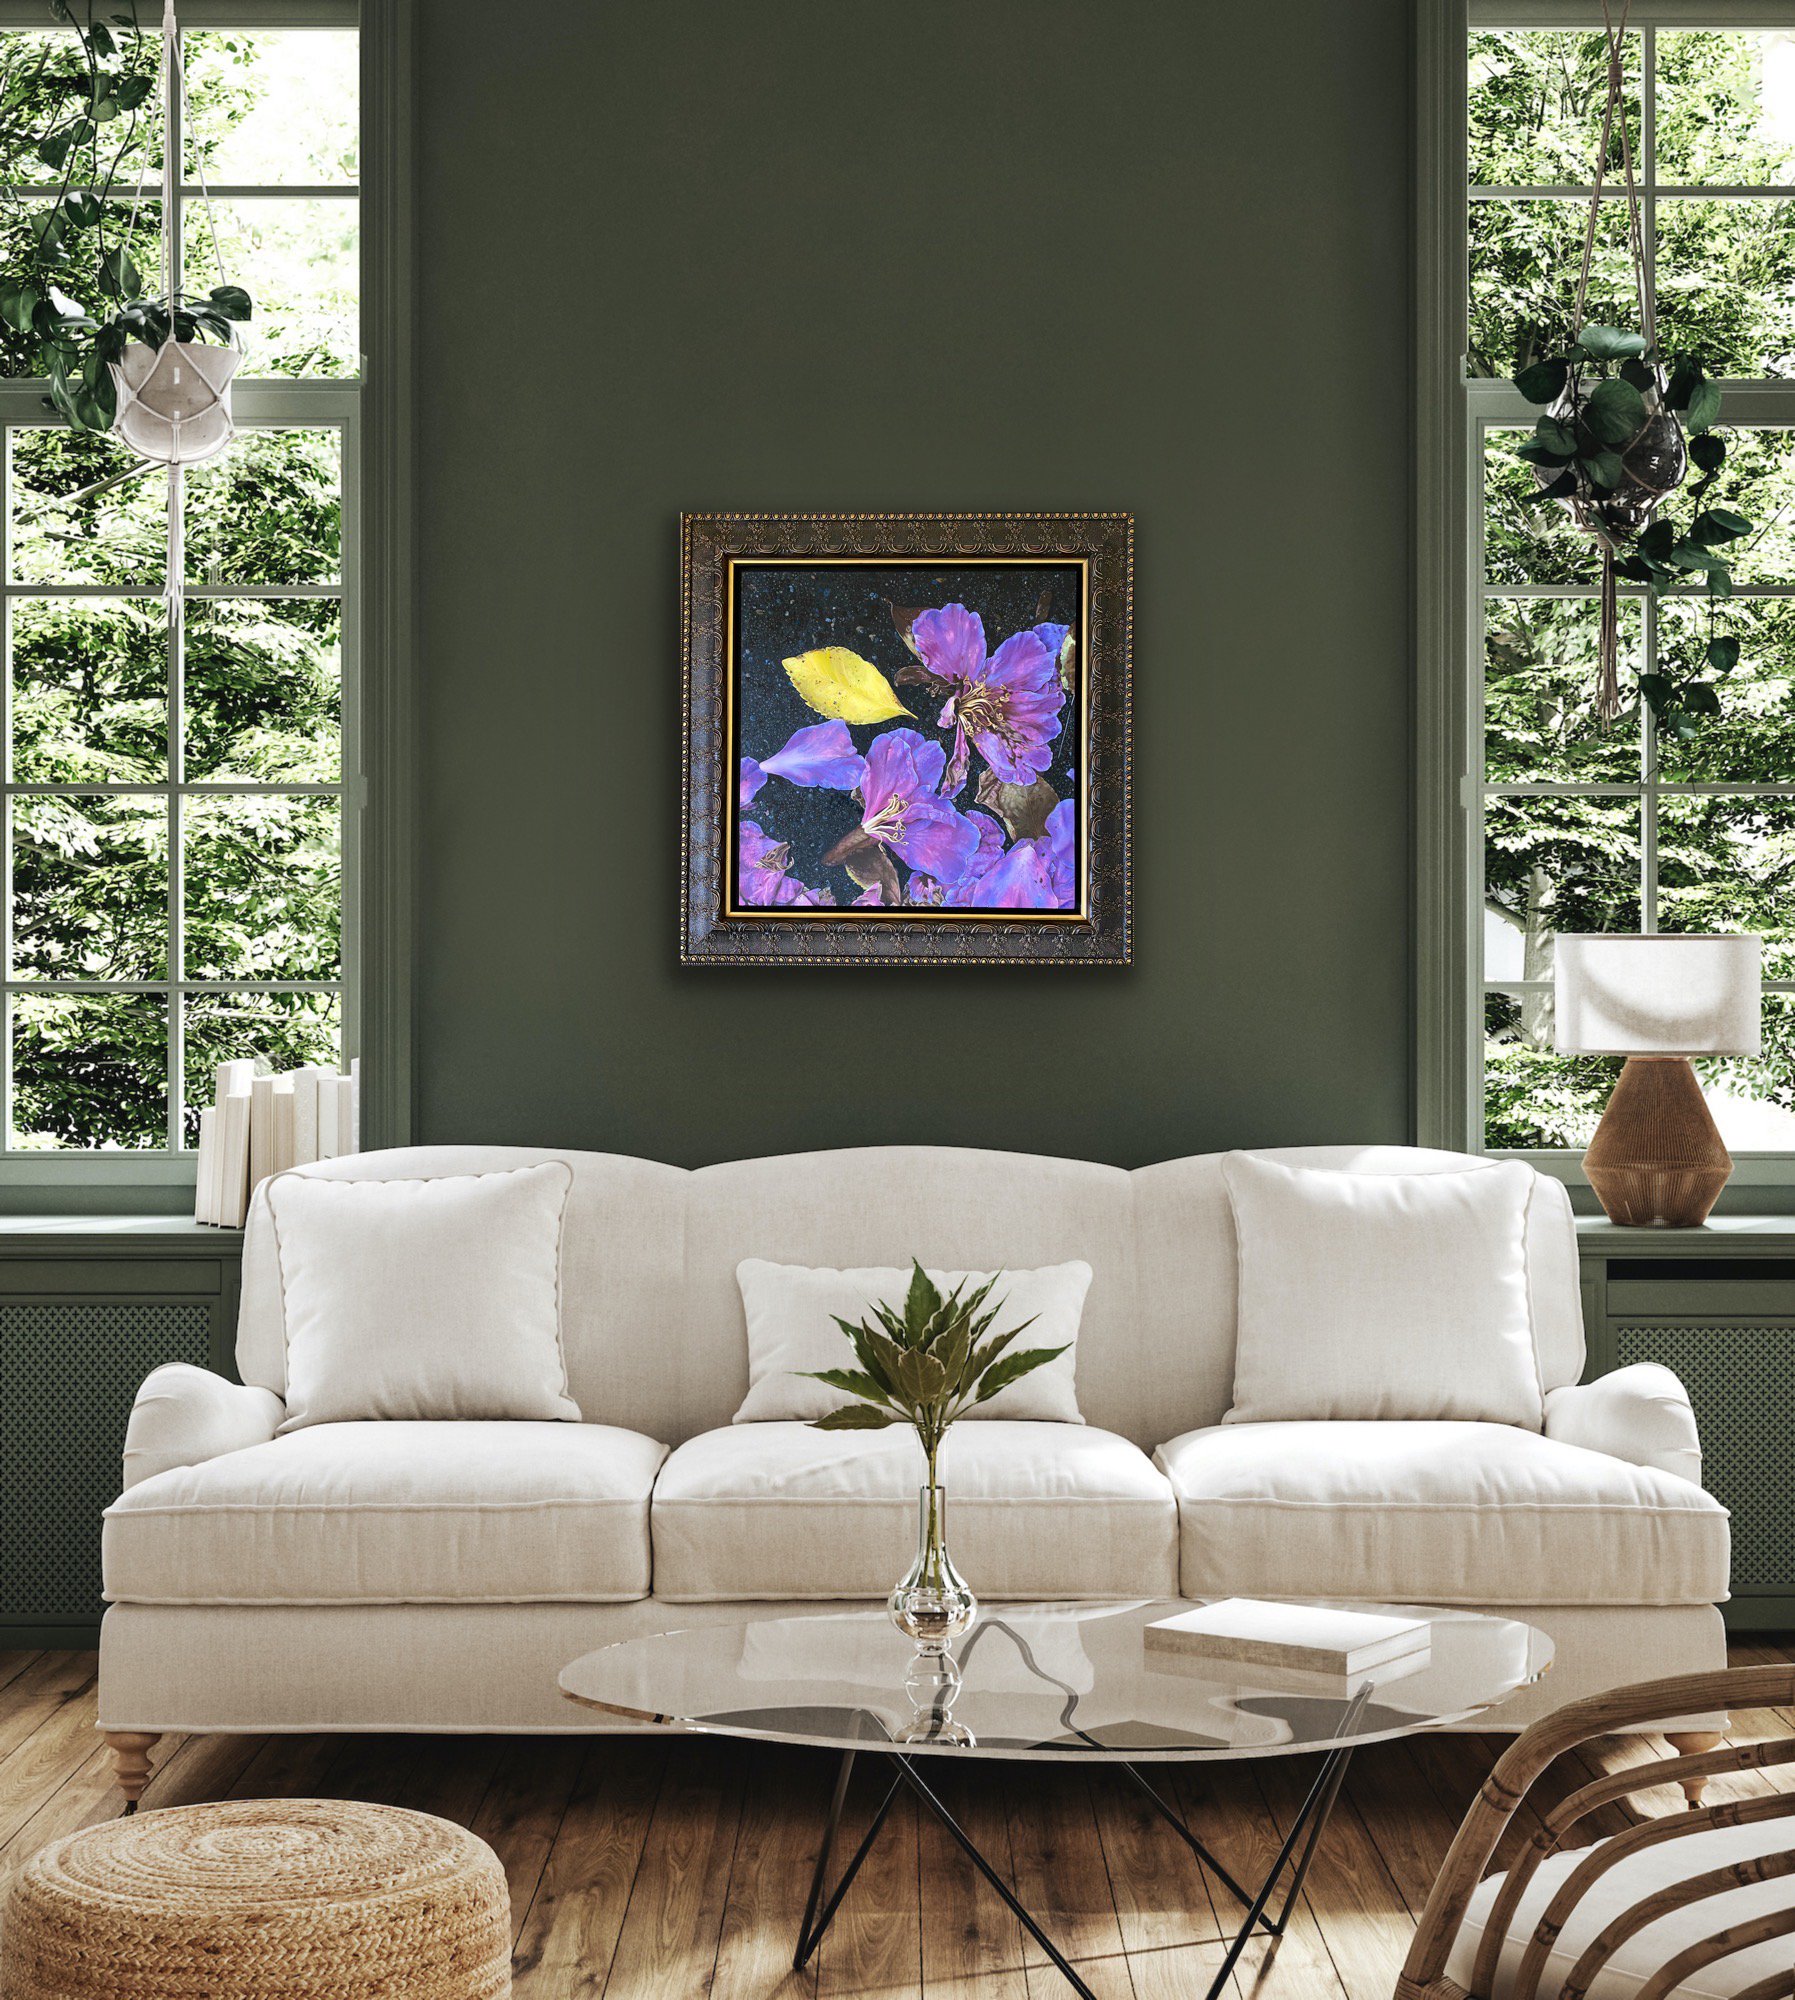 D Liguori Art and Story_Raining Petals_24x24 Oil on Canvas_Framed_Green LR.jpg